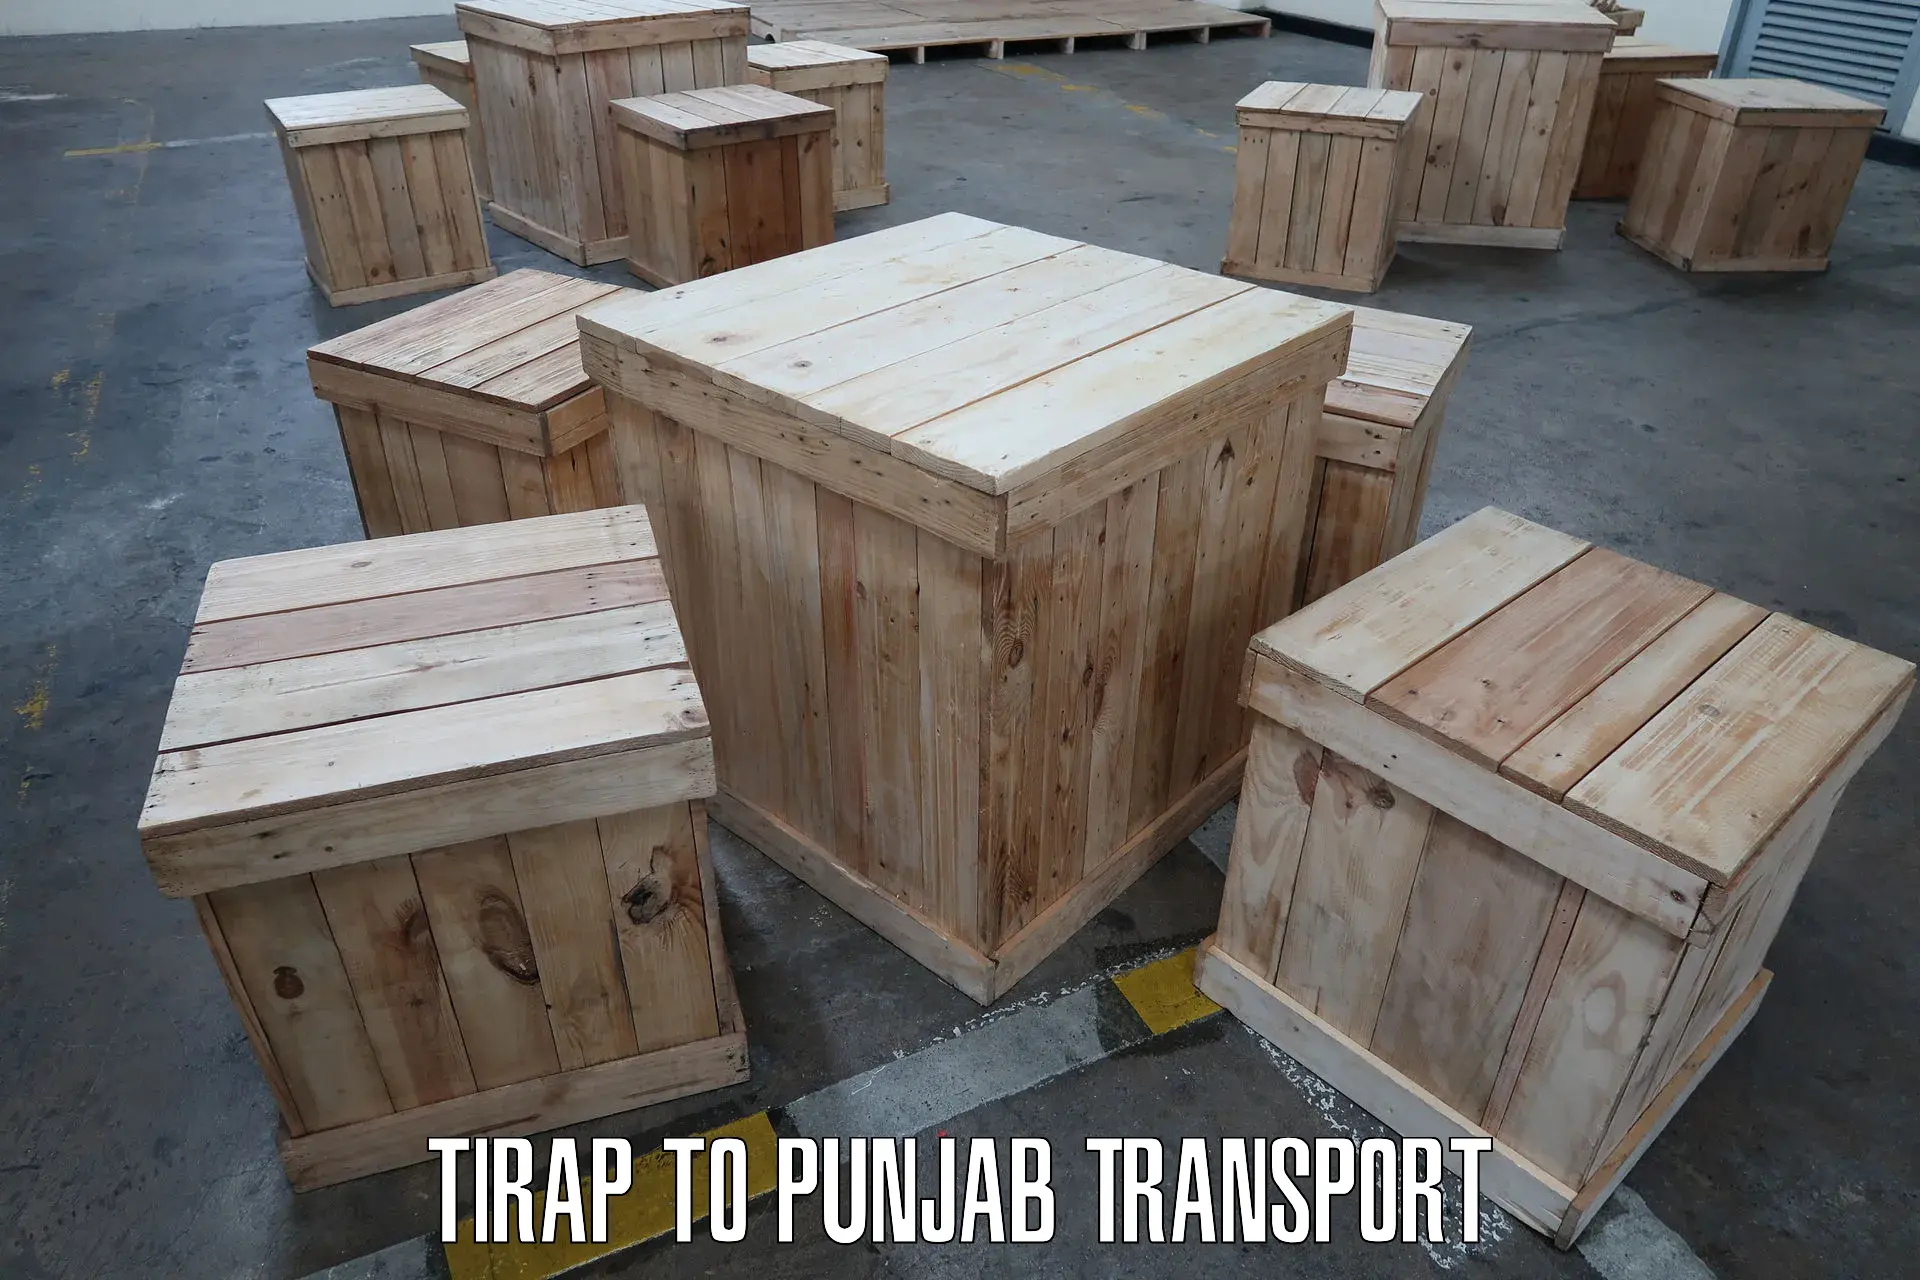 Cycle transportation service Tirap to Amritsar